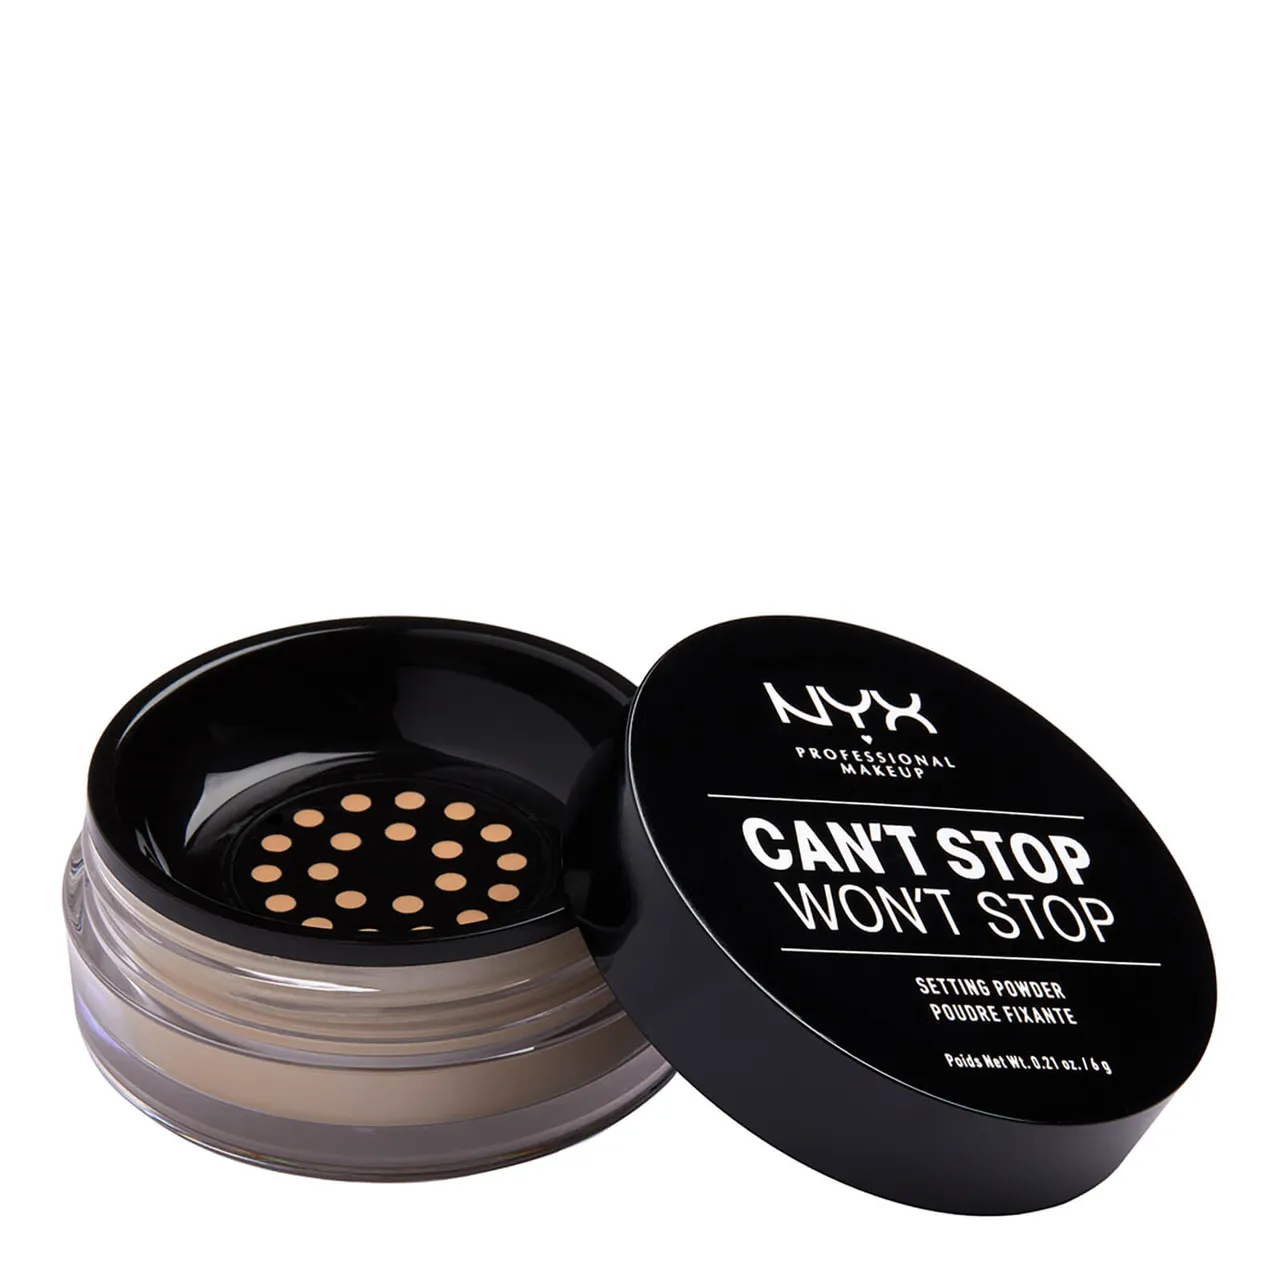 NYX Professional Makeup Can't Stop Won't Stop Setting Powder (Various Shades) - Medium